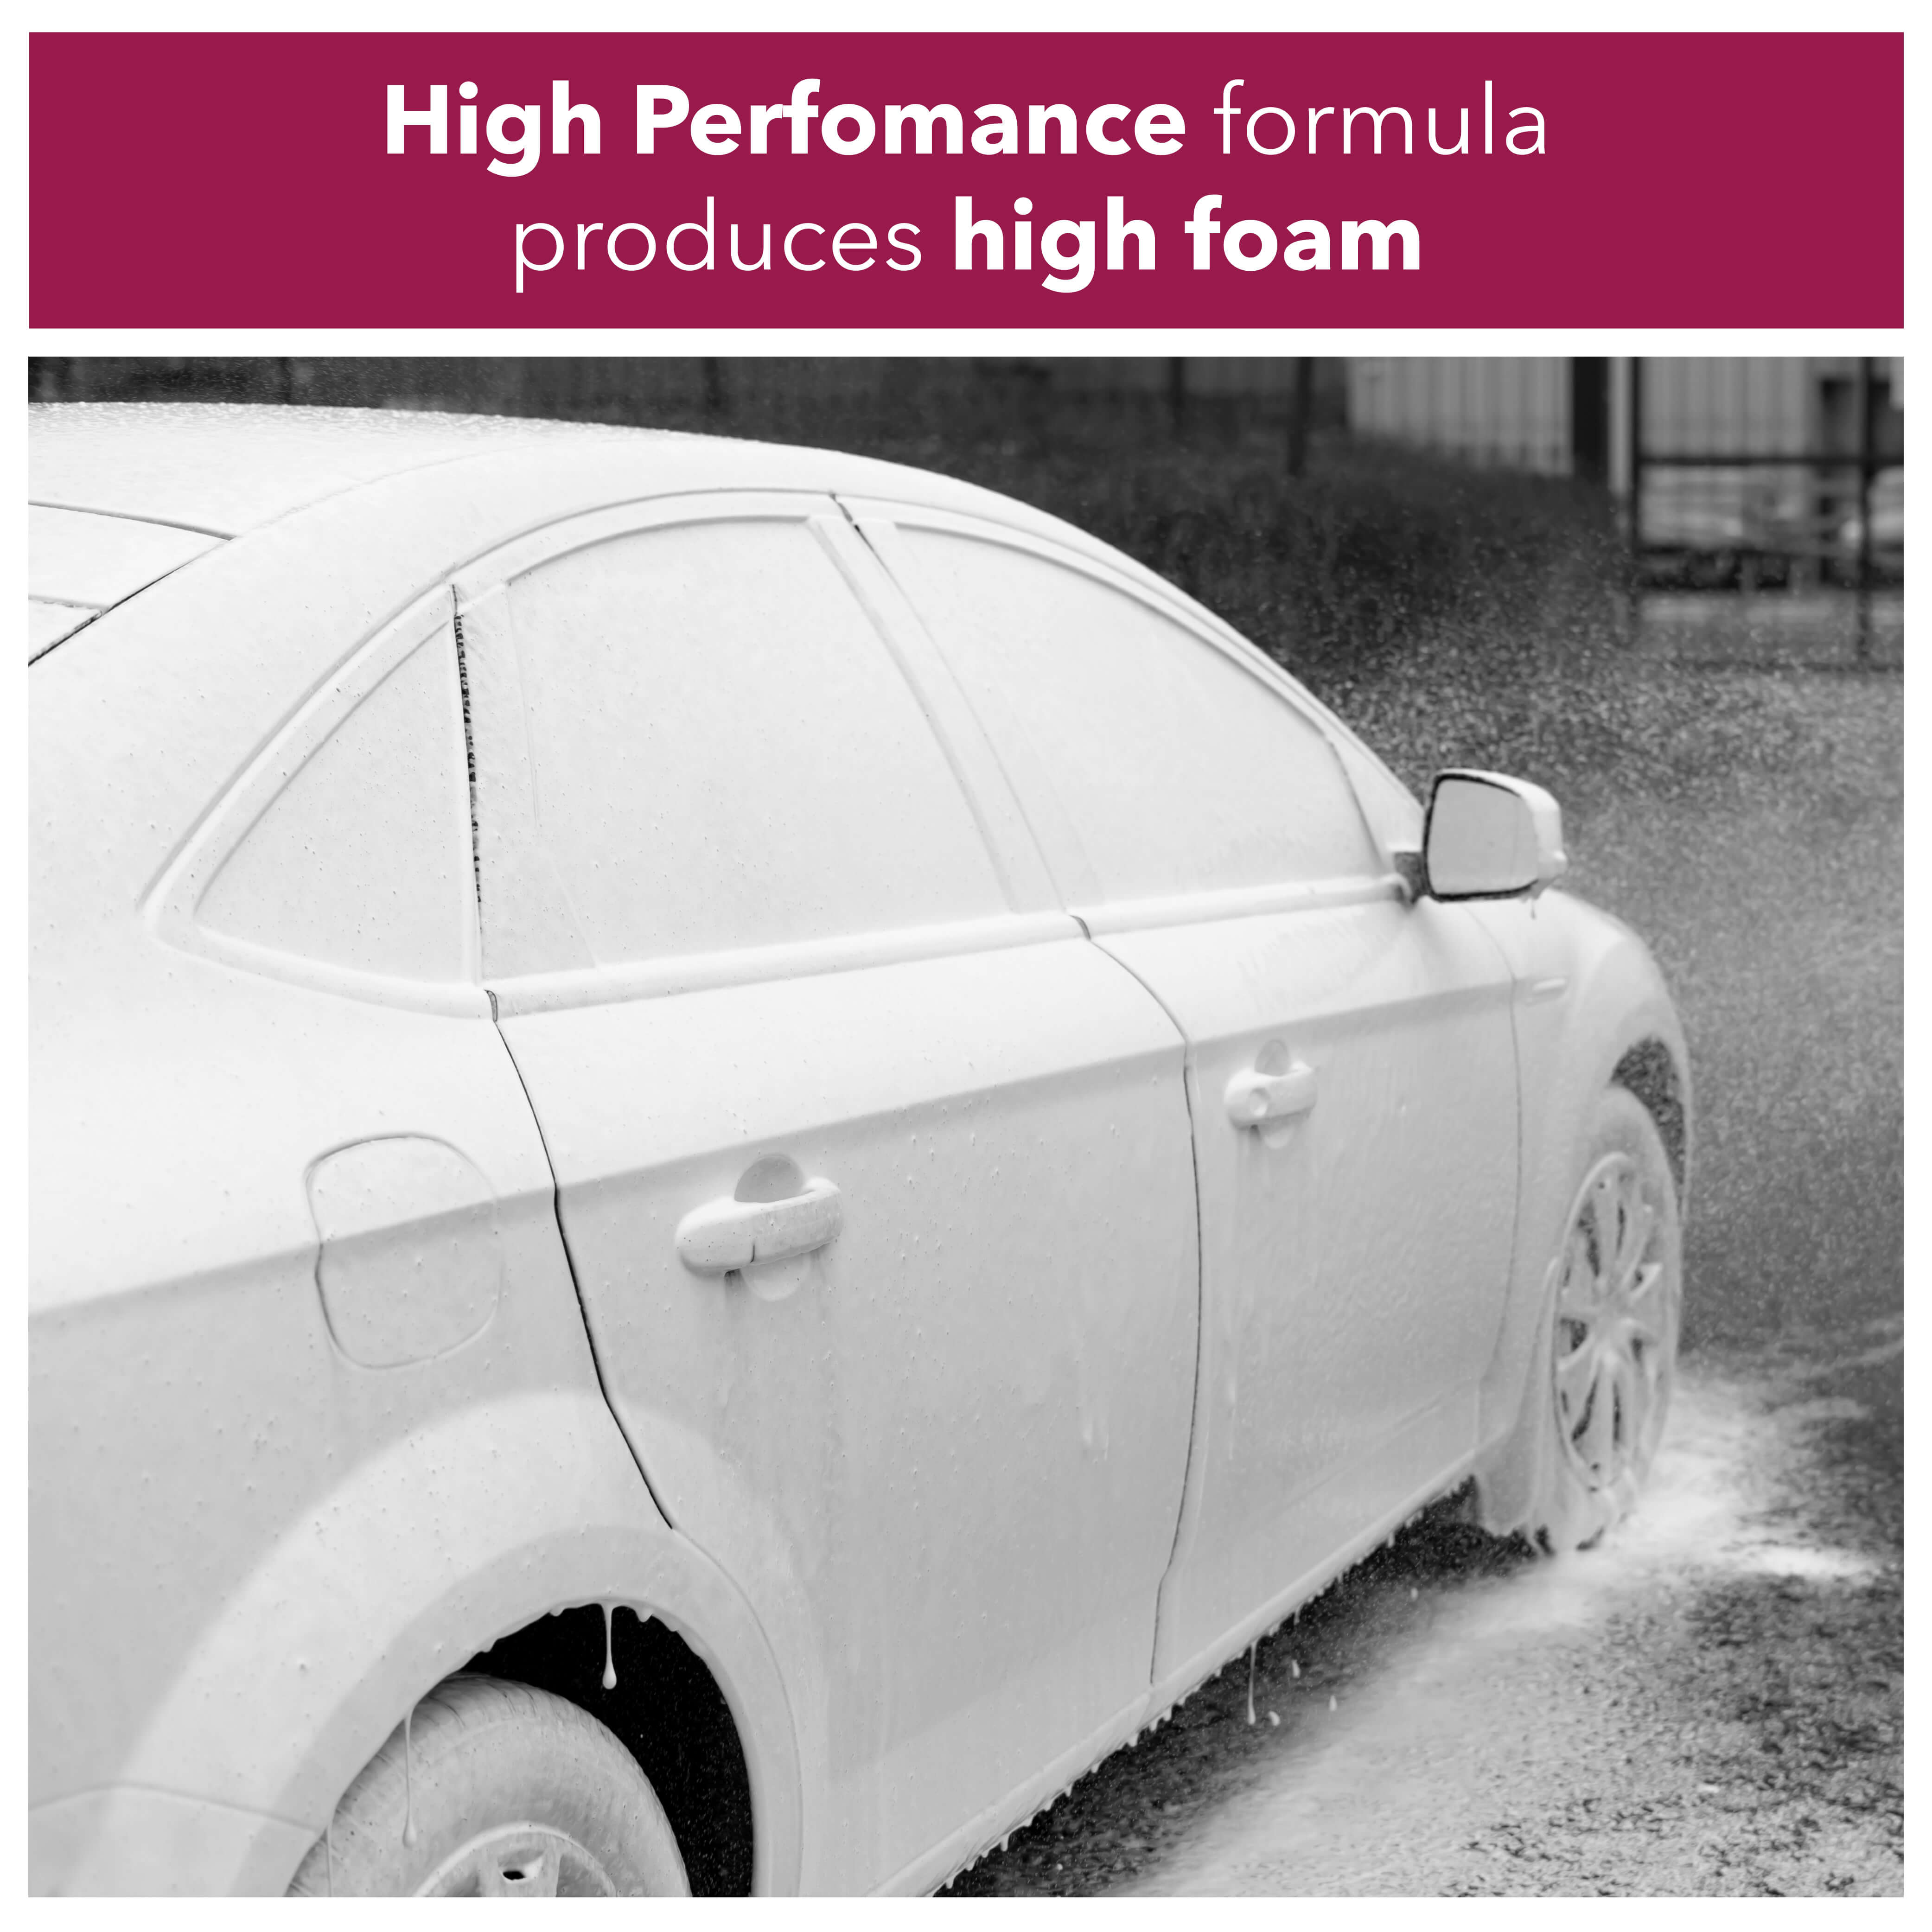 High performance formula produces high foam